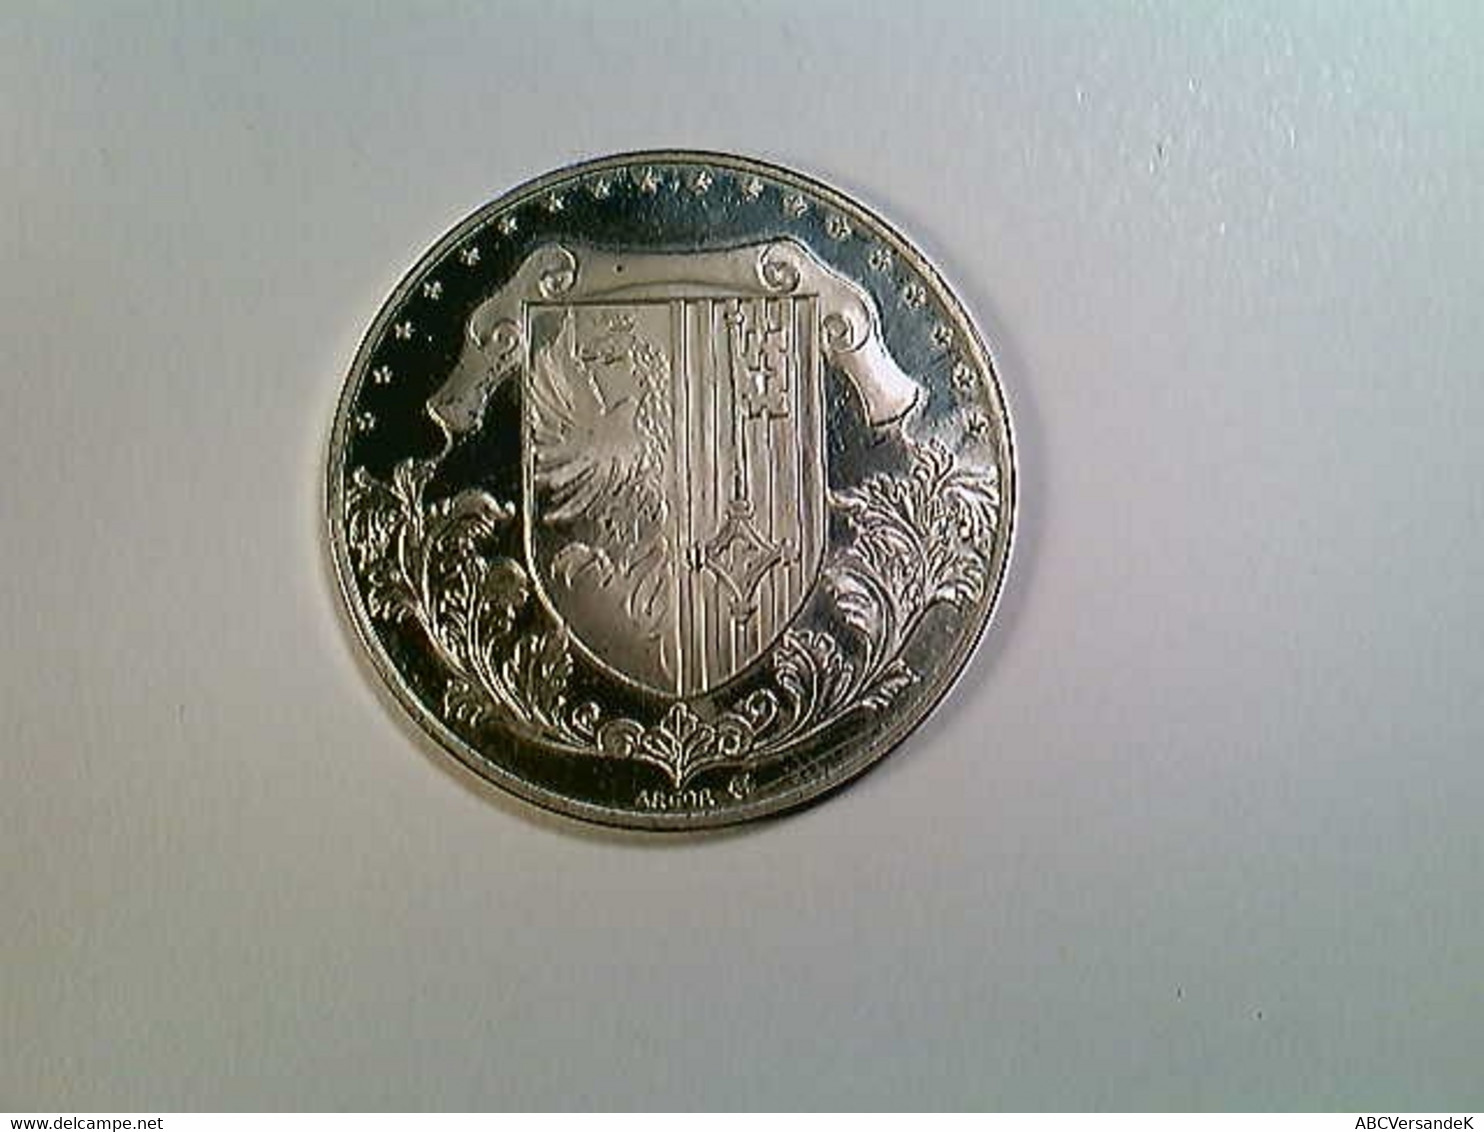 Münze Republica Geneva 1814-1964, Schweiz Kantonalmünze, Argor, Silber, SELTEN! - Numismatics